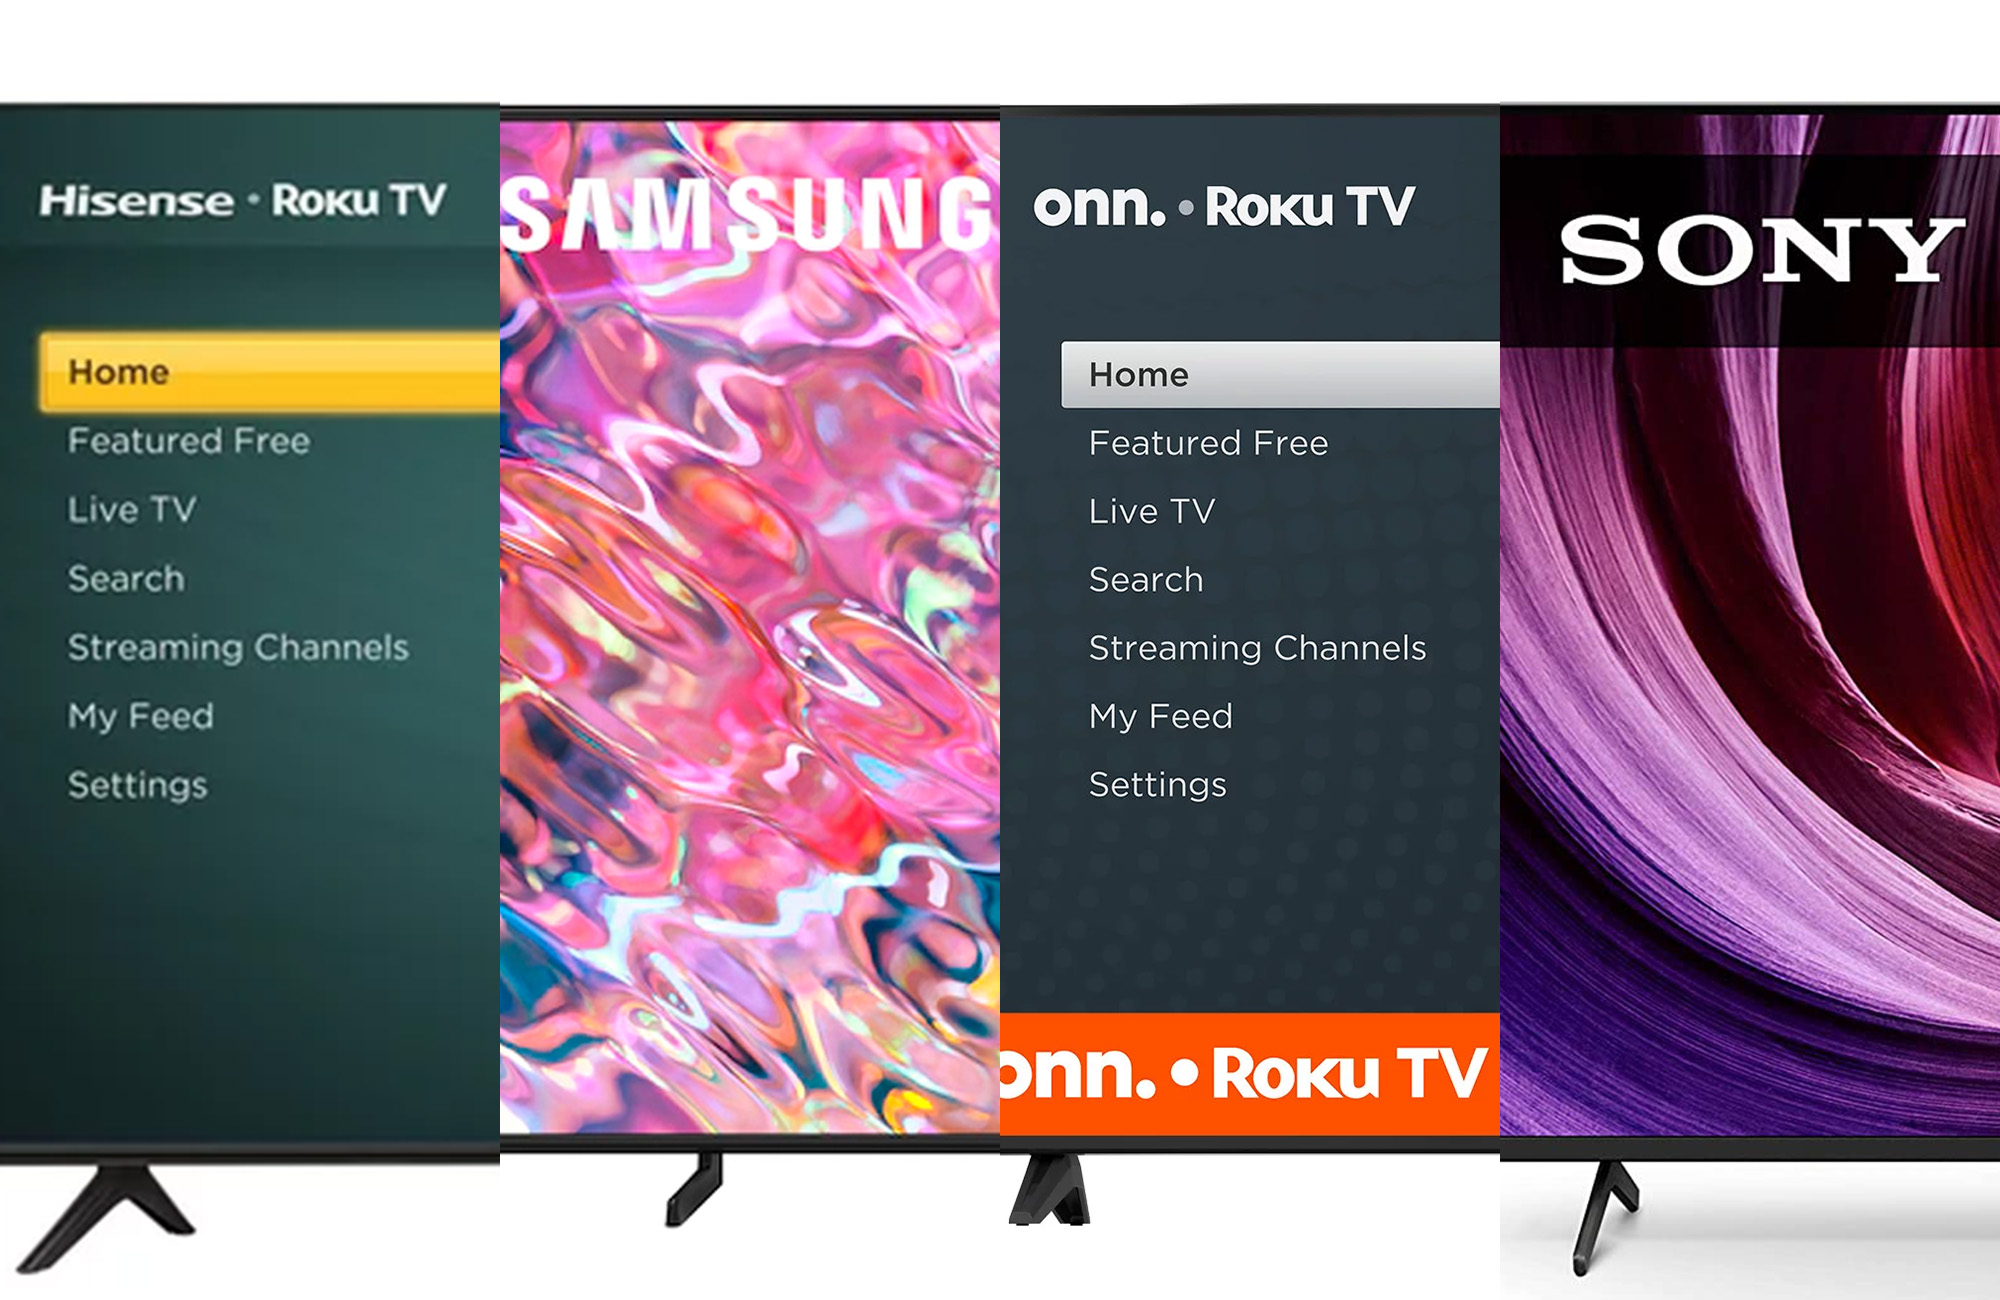 Get a 4K Hisense Roku smart TV for less than $400 at Walmart